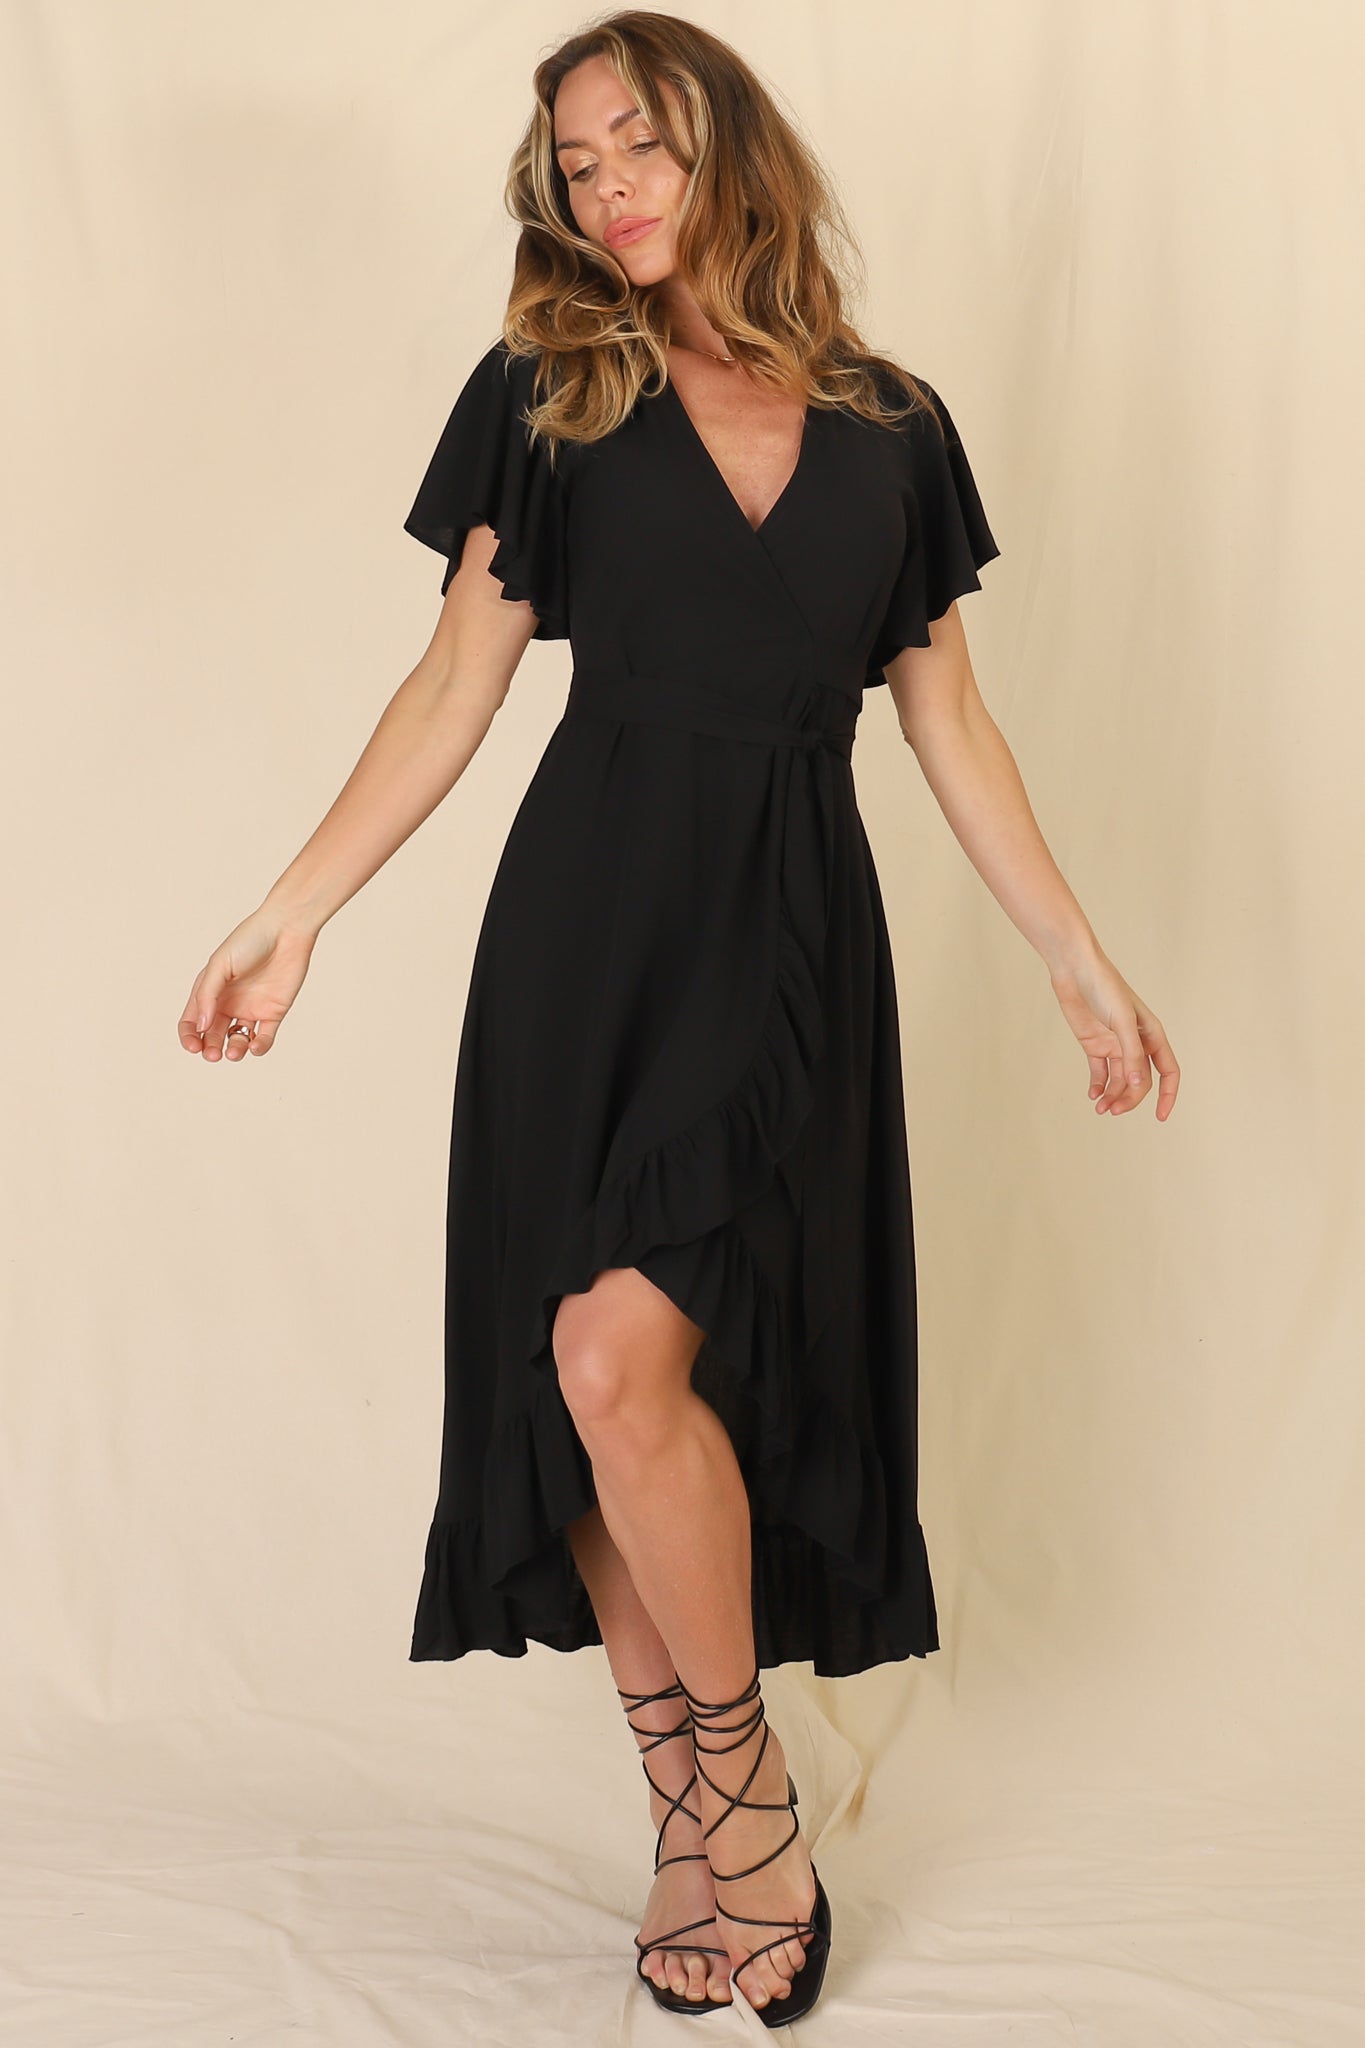 Carolina Midi Dress - V Neck Wrap Dress with Ruffle High Low Hemline in Black